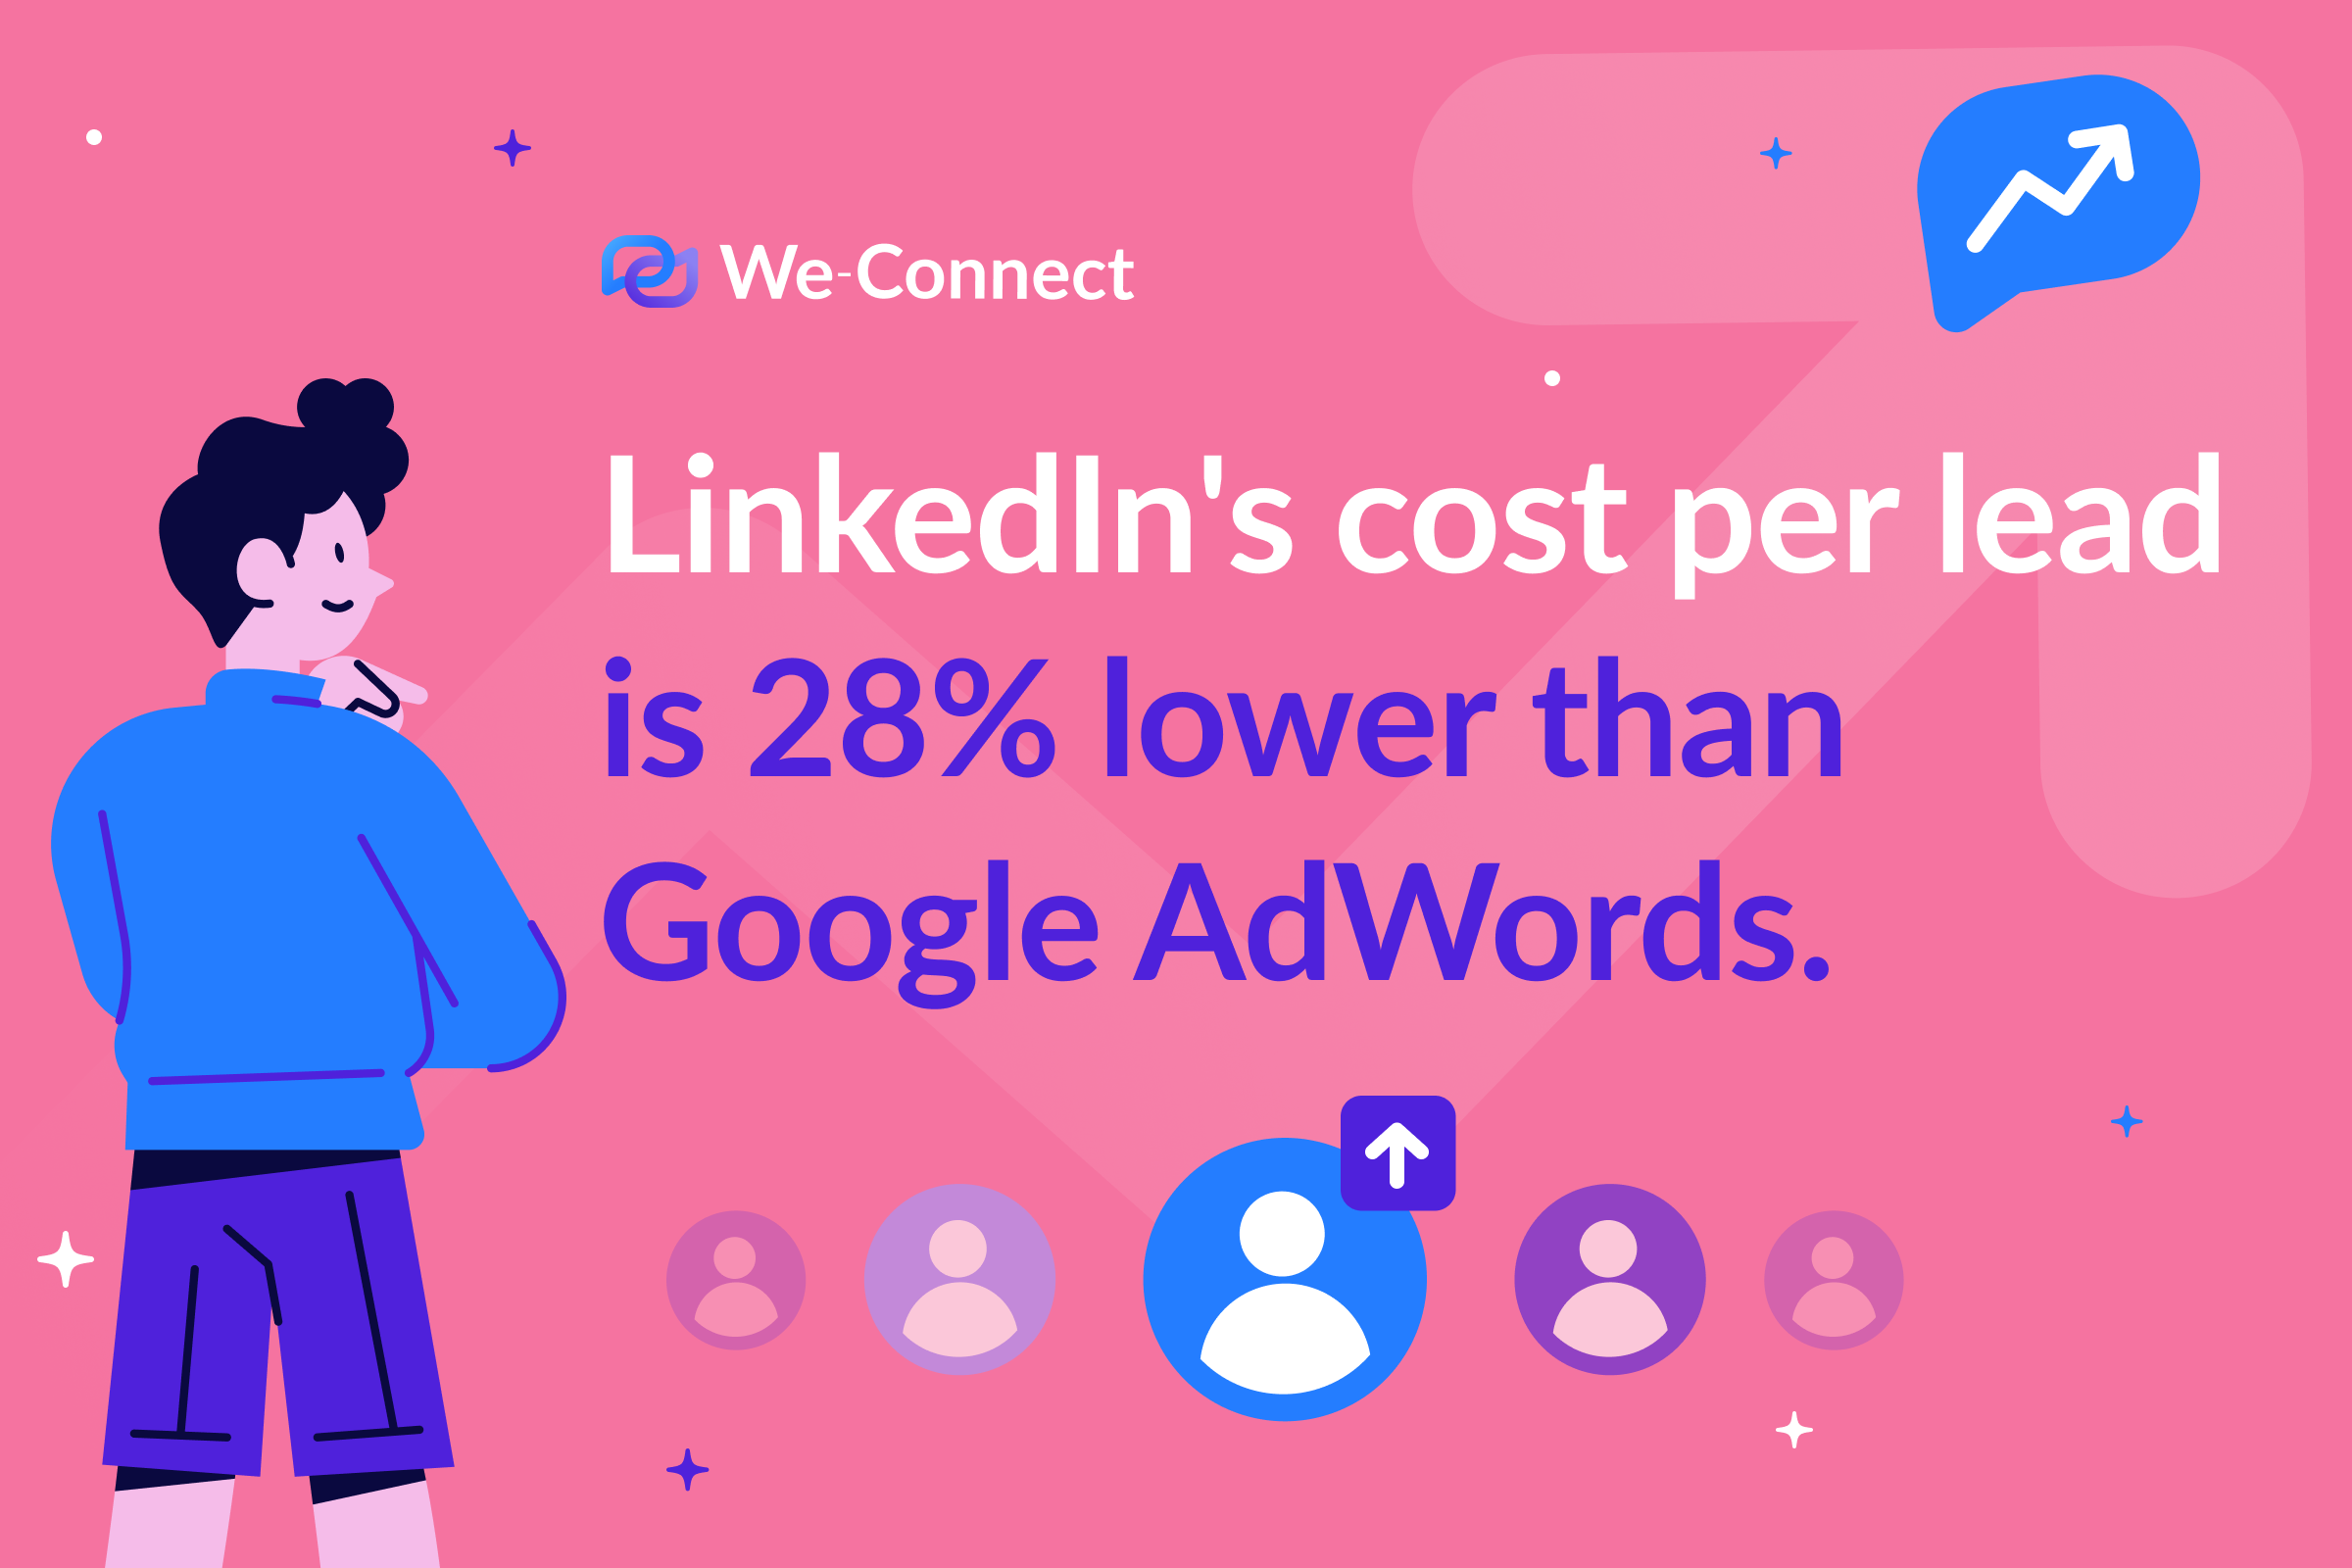 LinkedIn's cost per lead is 28% lower than Google AdWords